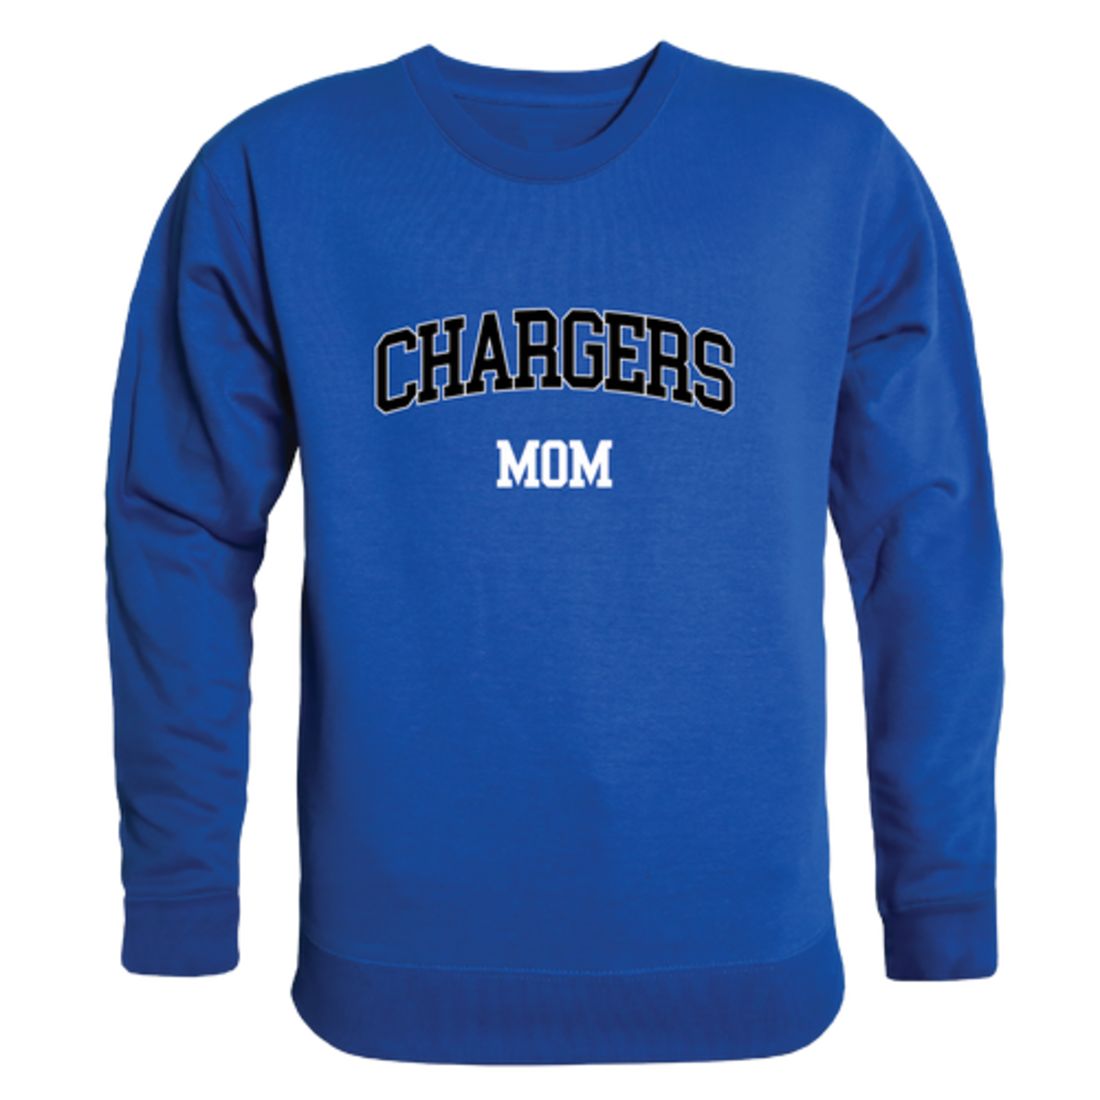 The University of Alabama in Huntsville Chargers Mom Fleece Crewneck Pullover Sweatshirt